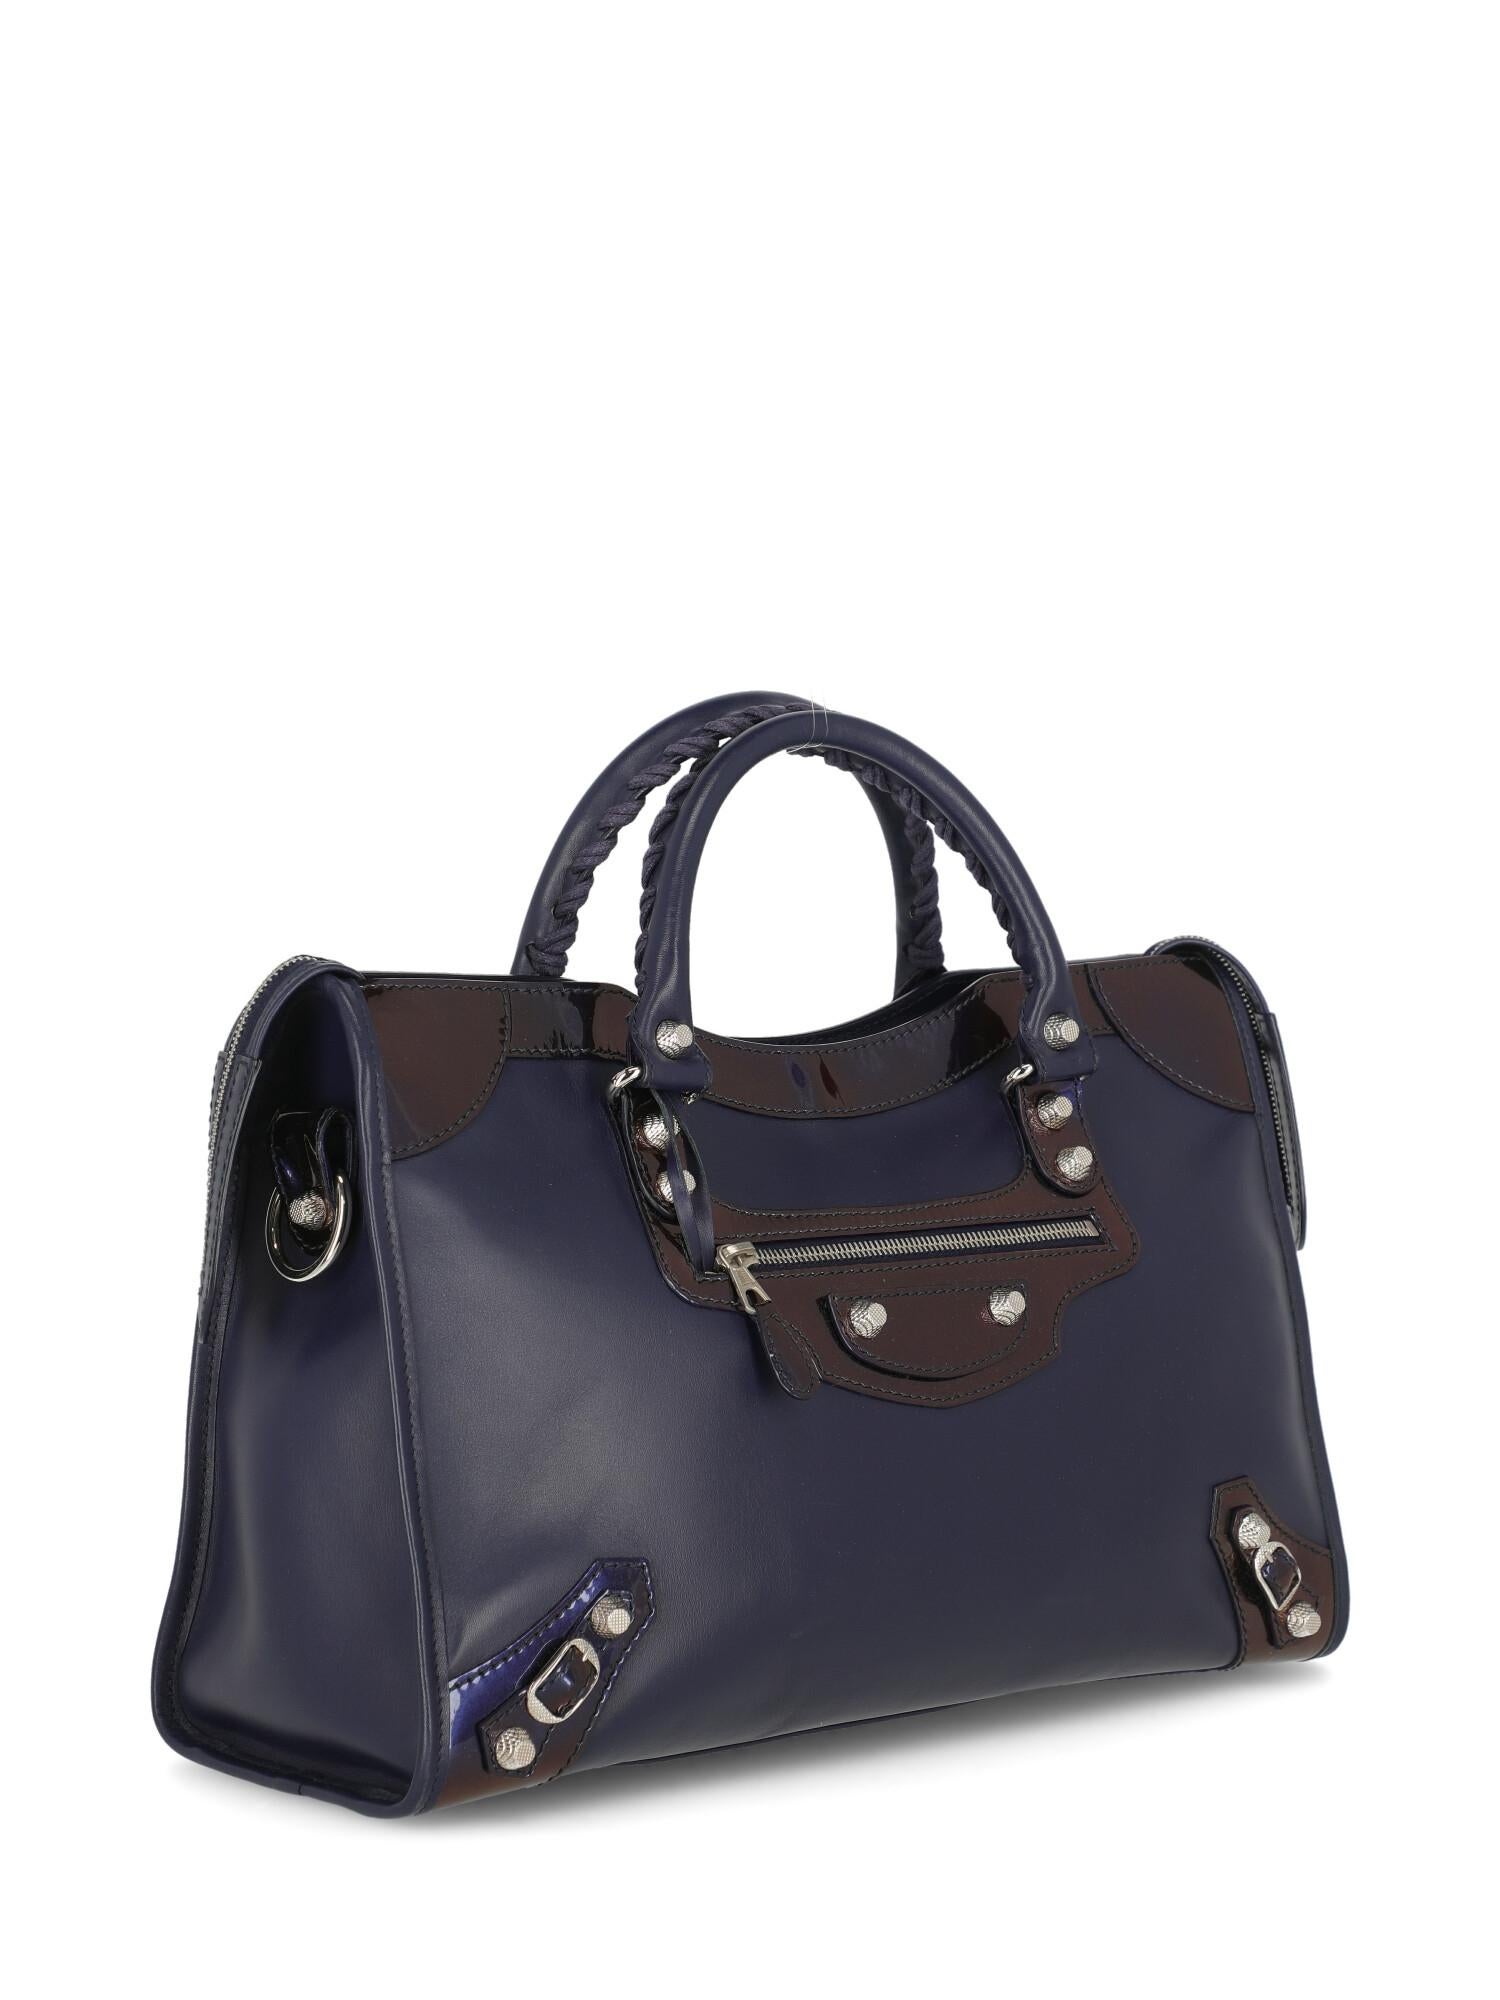 Black Balenciaga Woman Handbag City Navy Leather For Sale